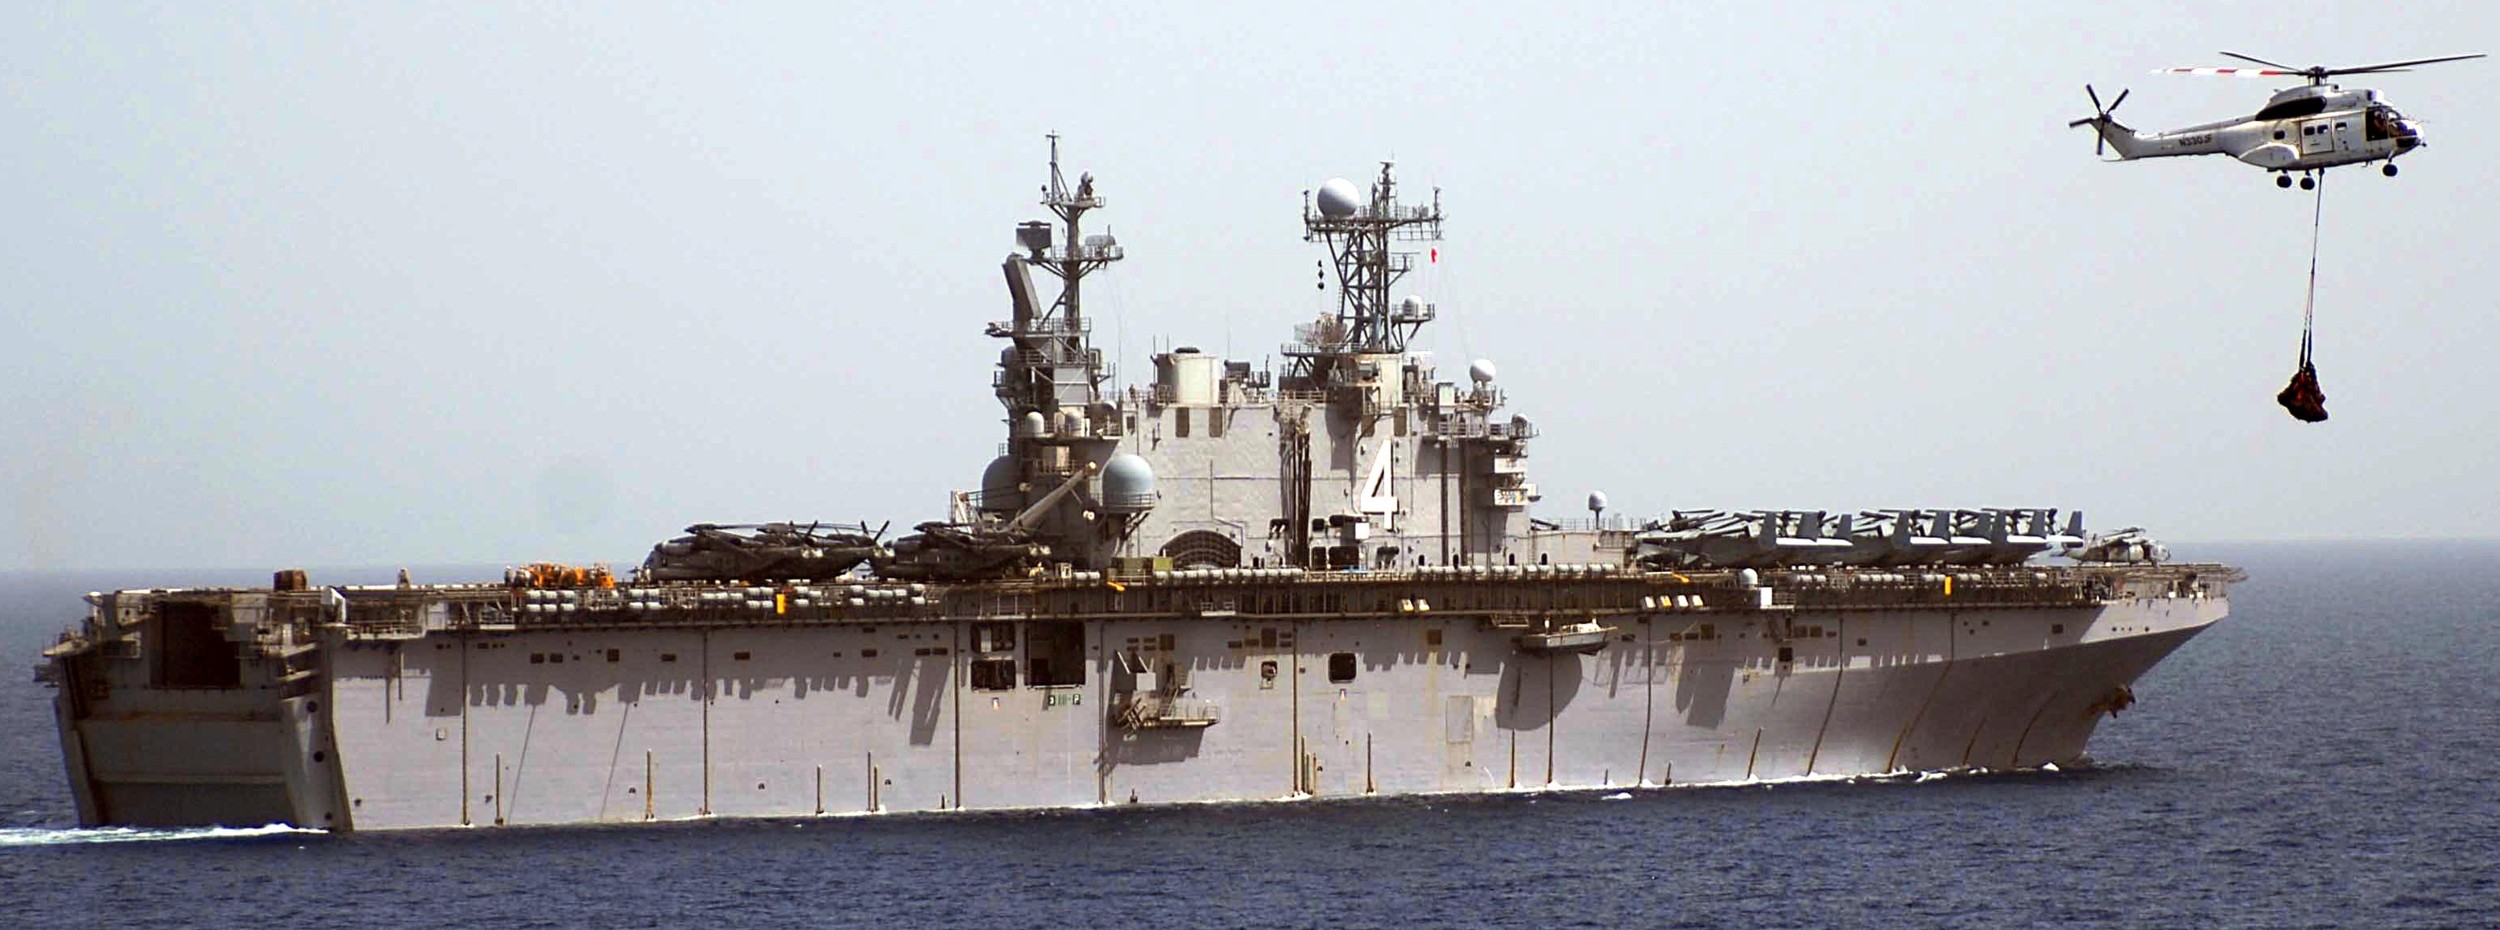 lha-4 uss nassau tarawa class amphibious assault ship us navy 51